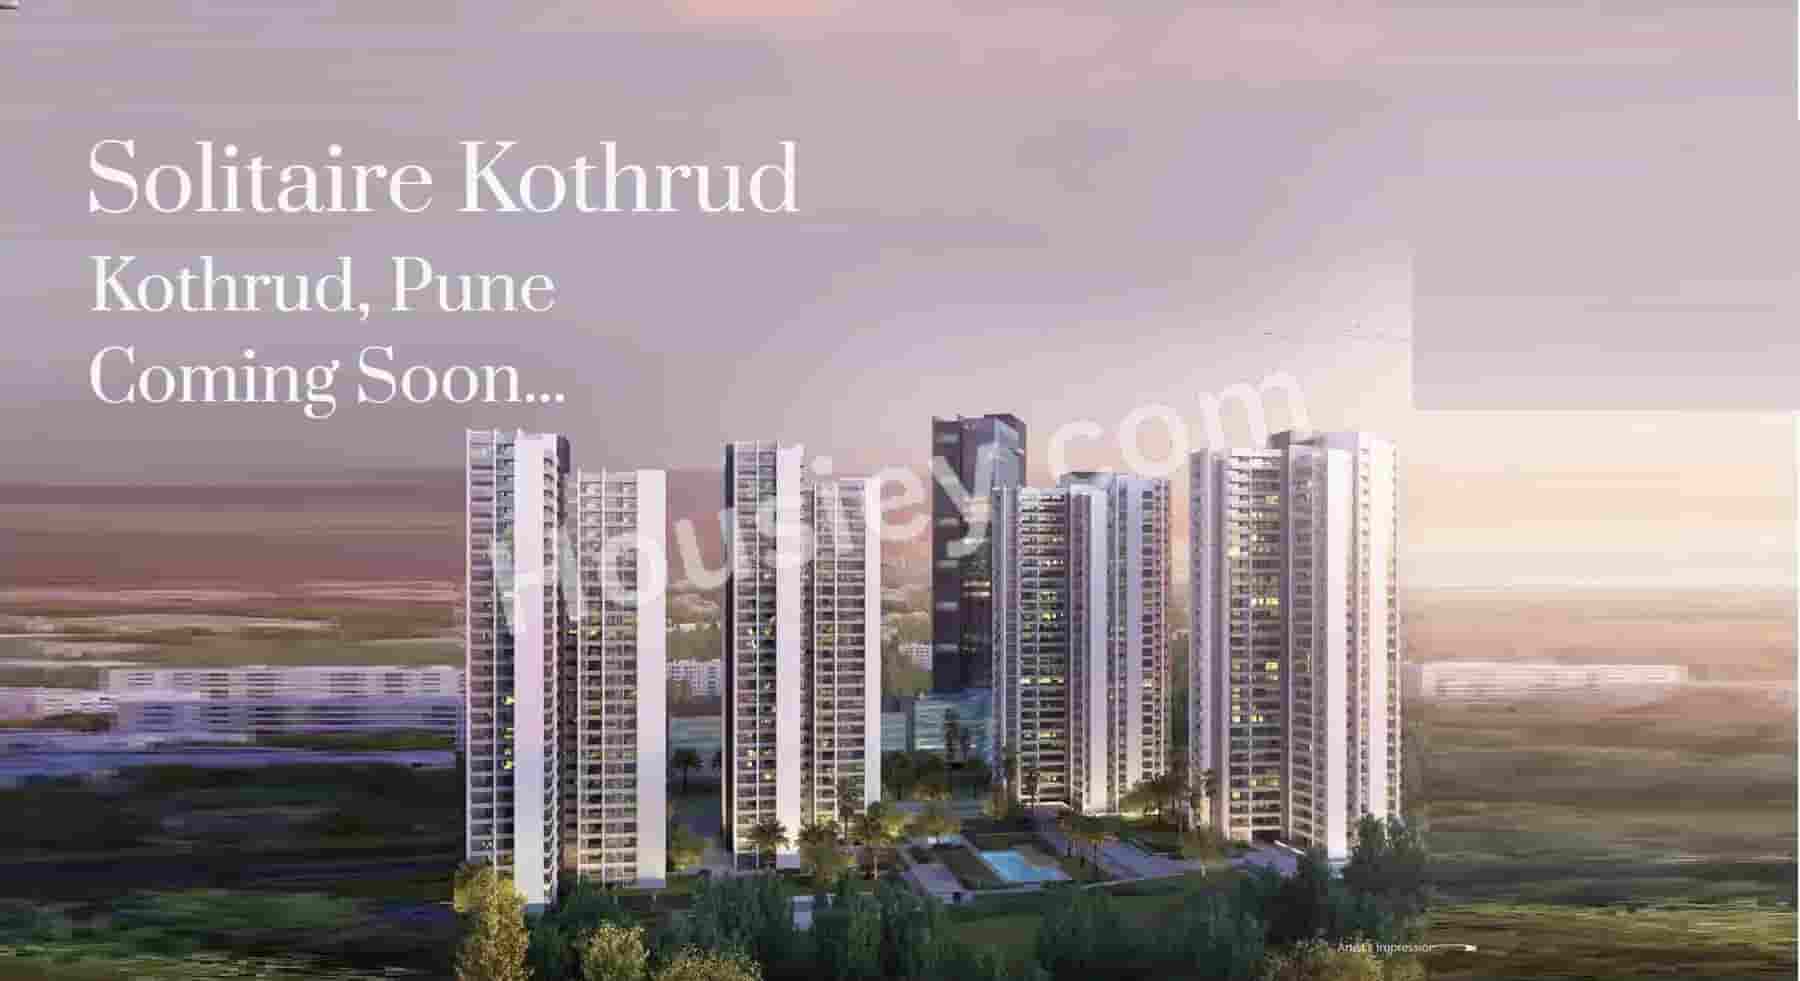 Solitaire Kothrud Pune